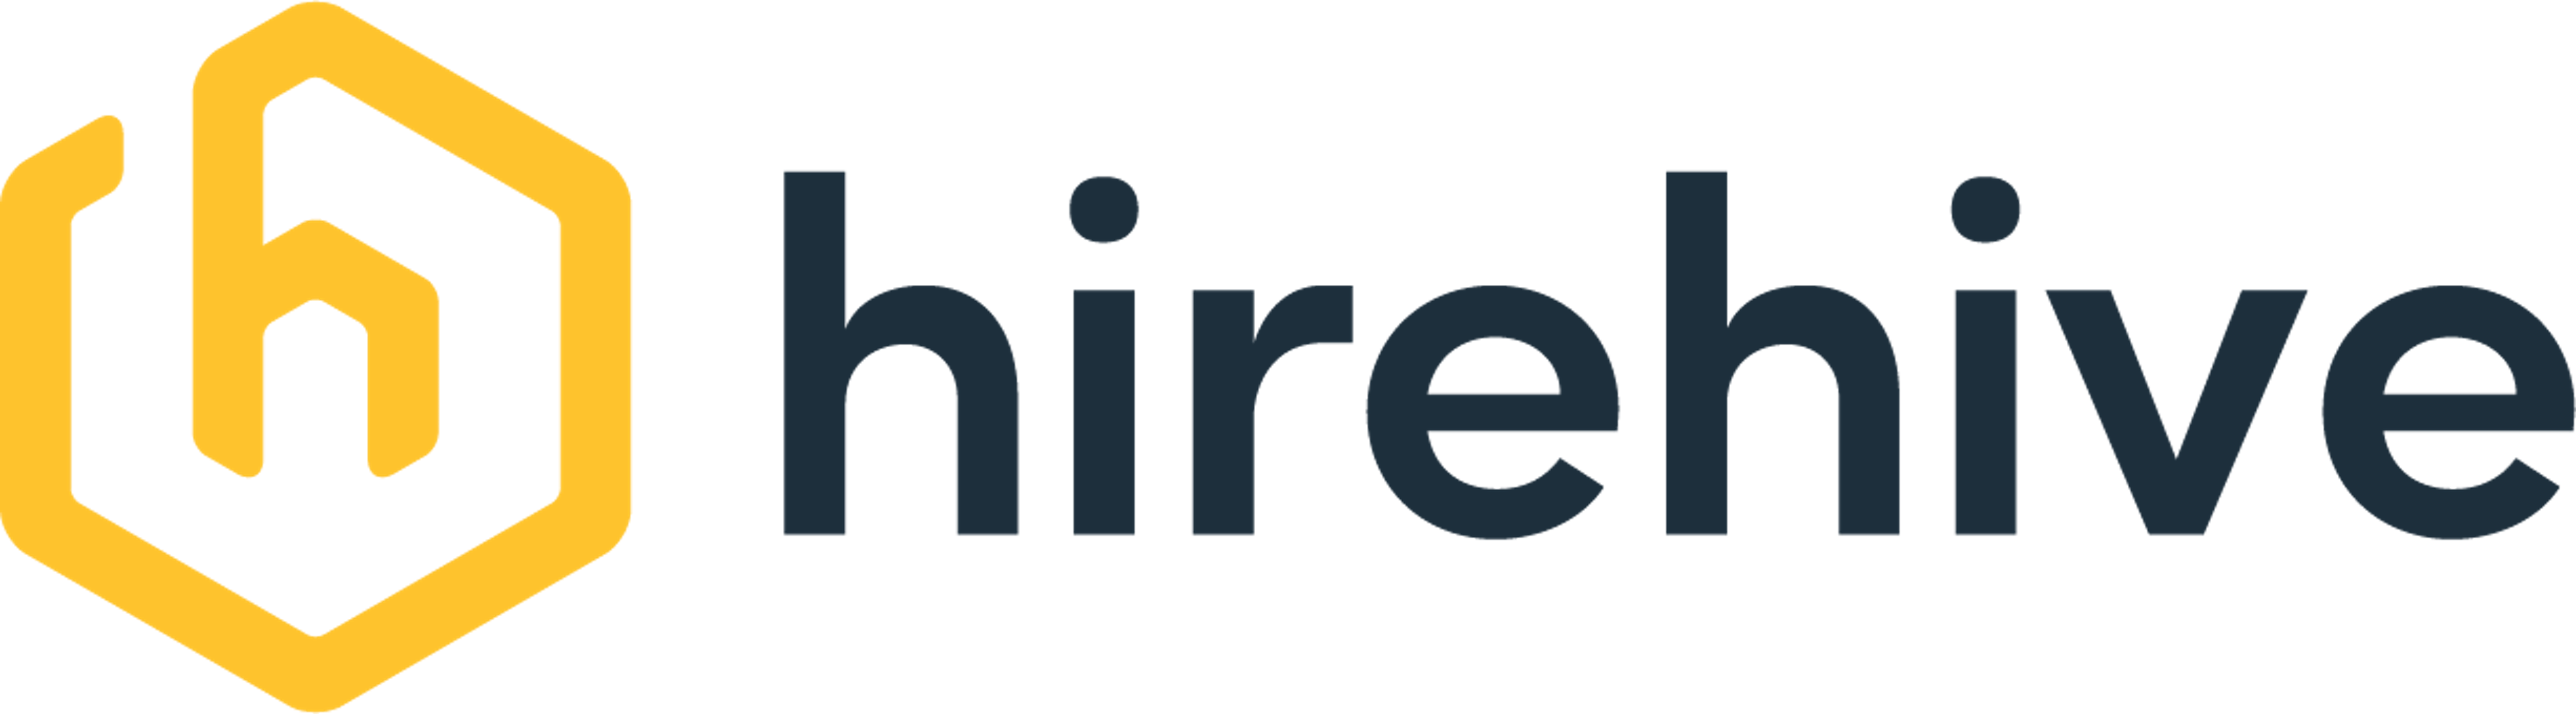 HireHive Logo